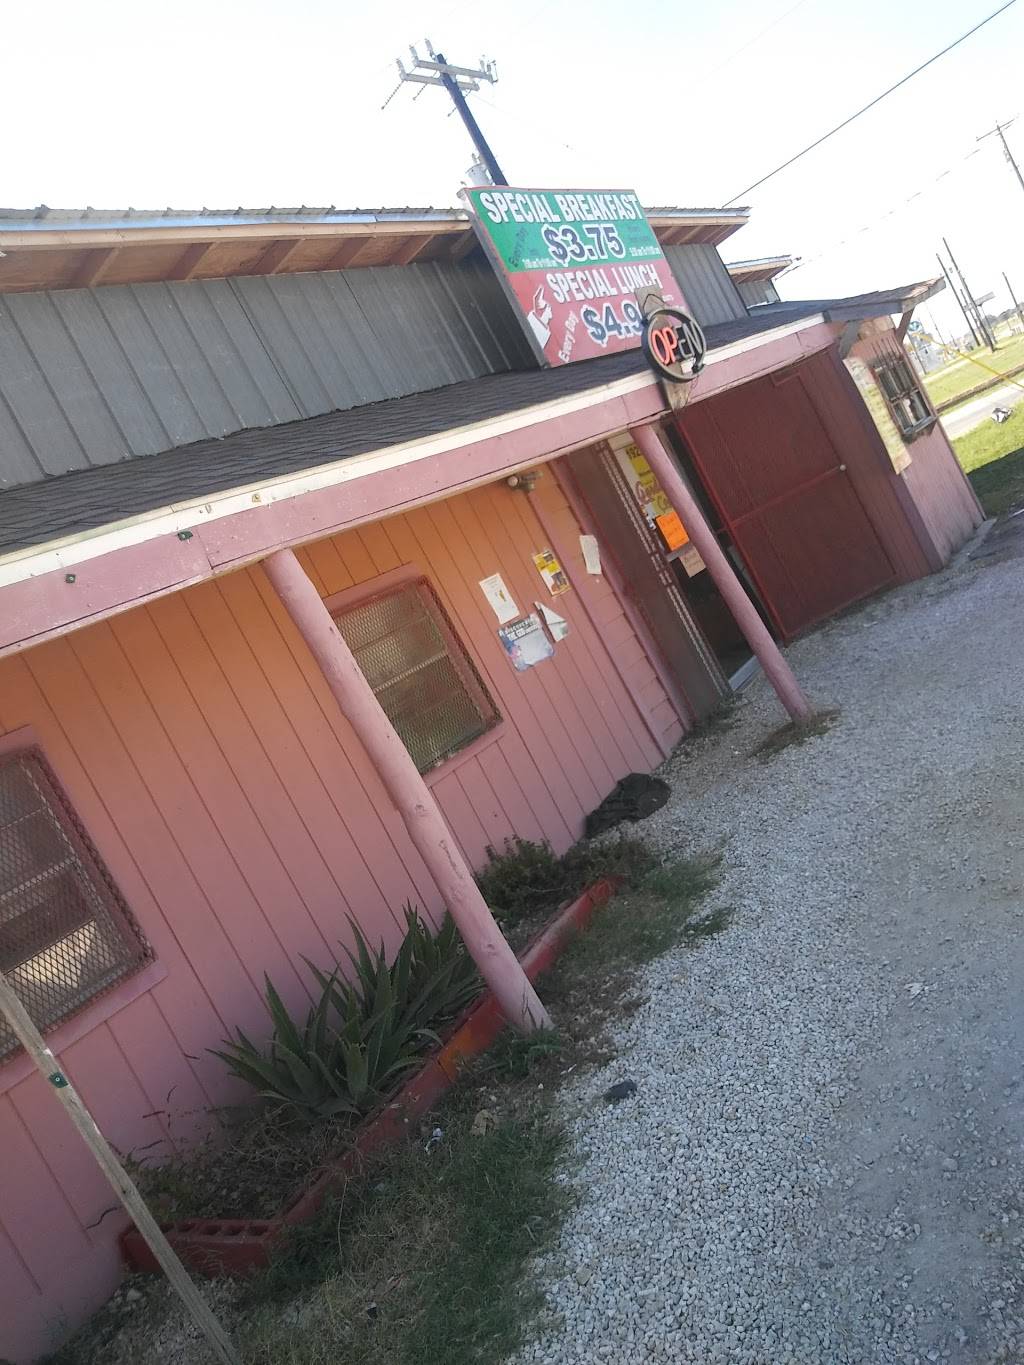 Southside Cardinal Cafe | restaurant | San Antonio, TX 78221, USA | 2106262626 OR +1 210-626-2626